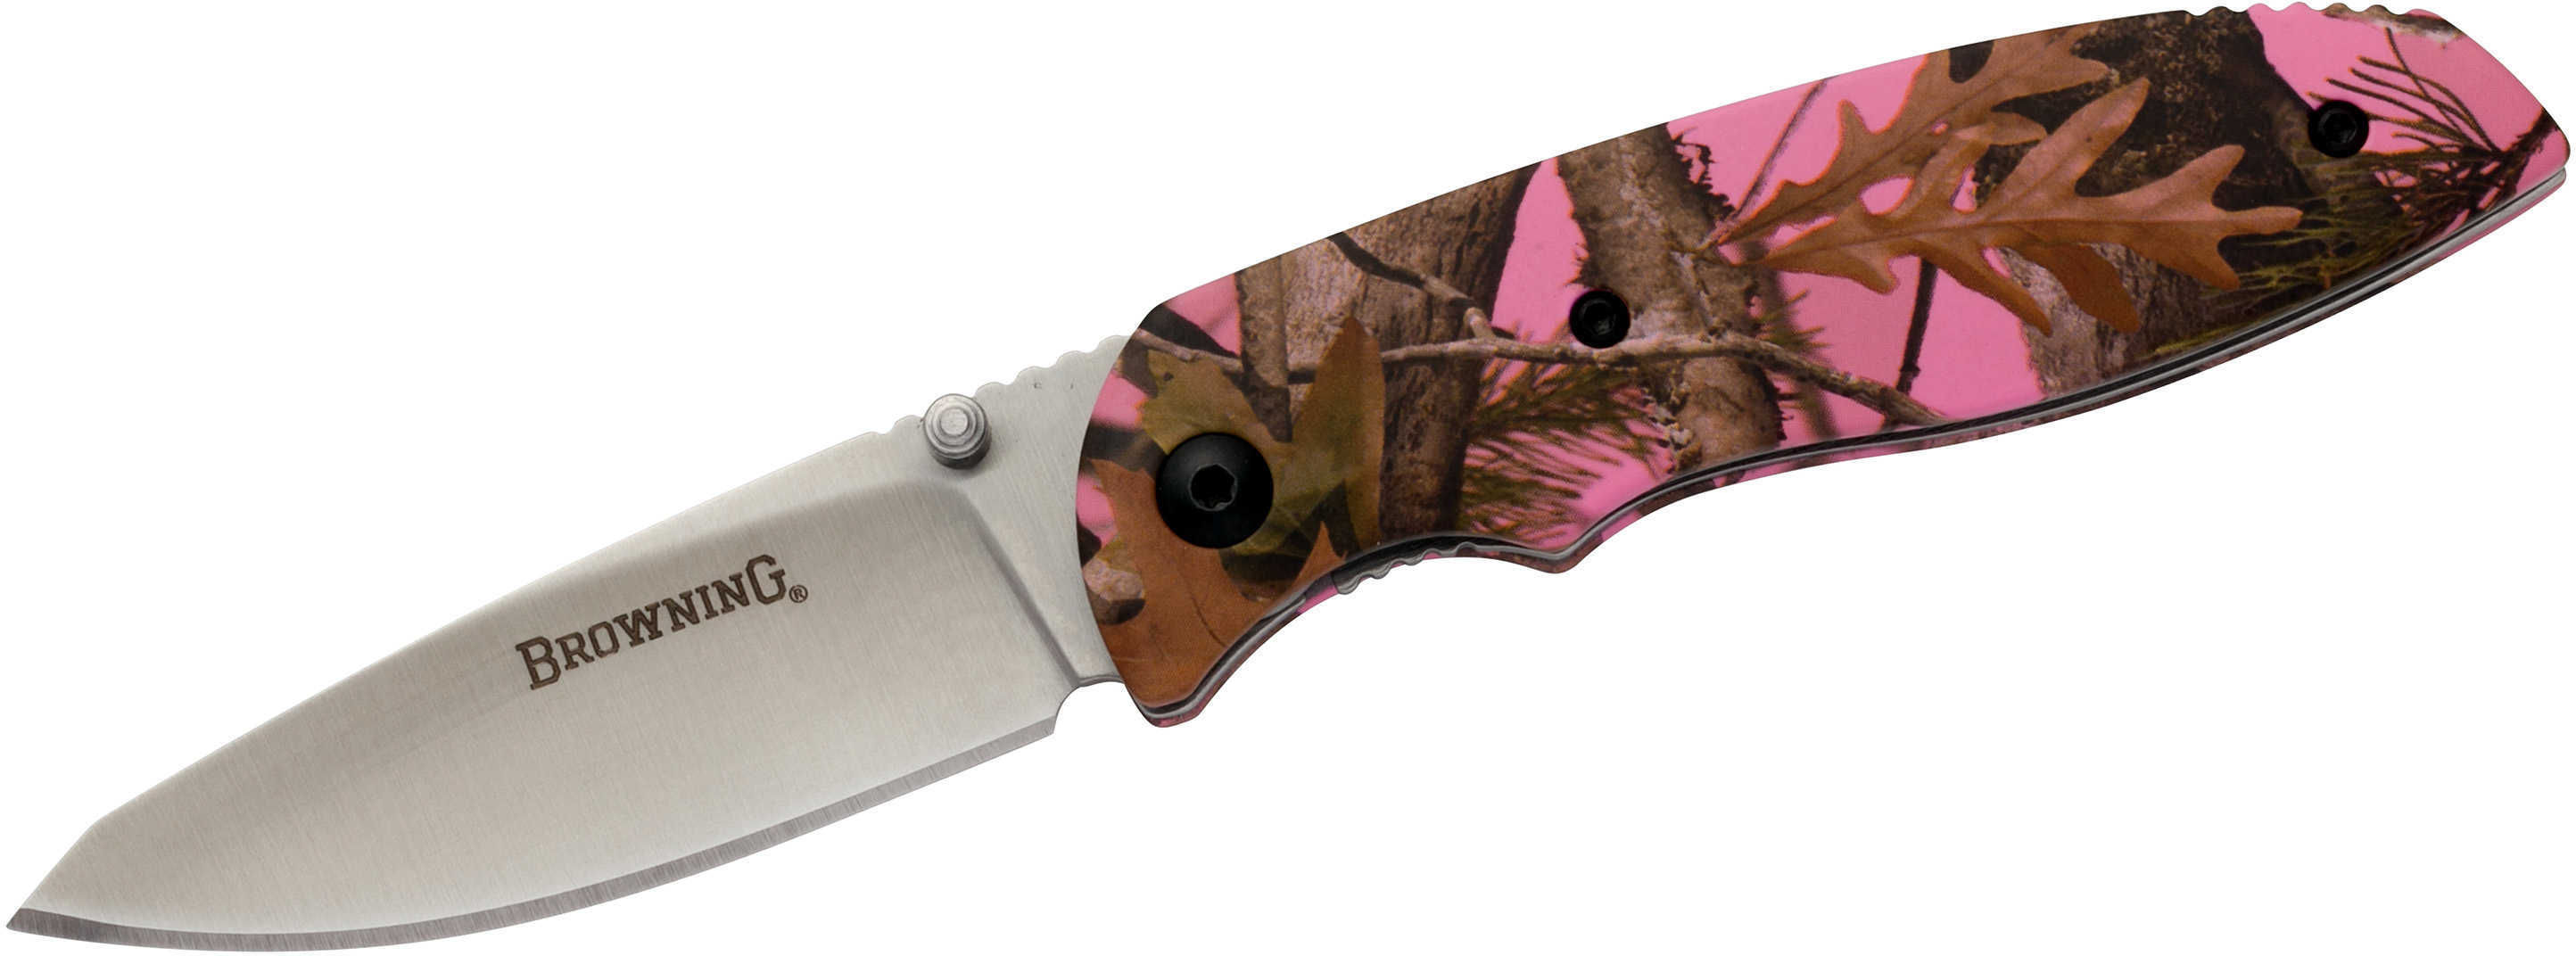 Browning EDC Folder Knife Pink Camouflage Md: 3220250-img-1